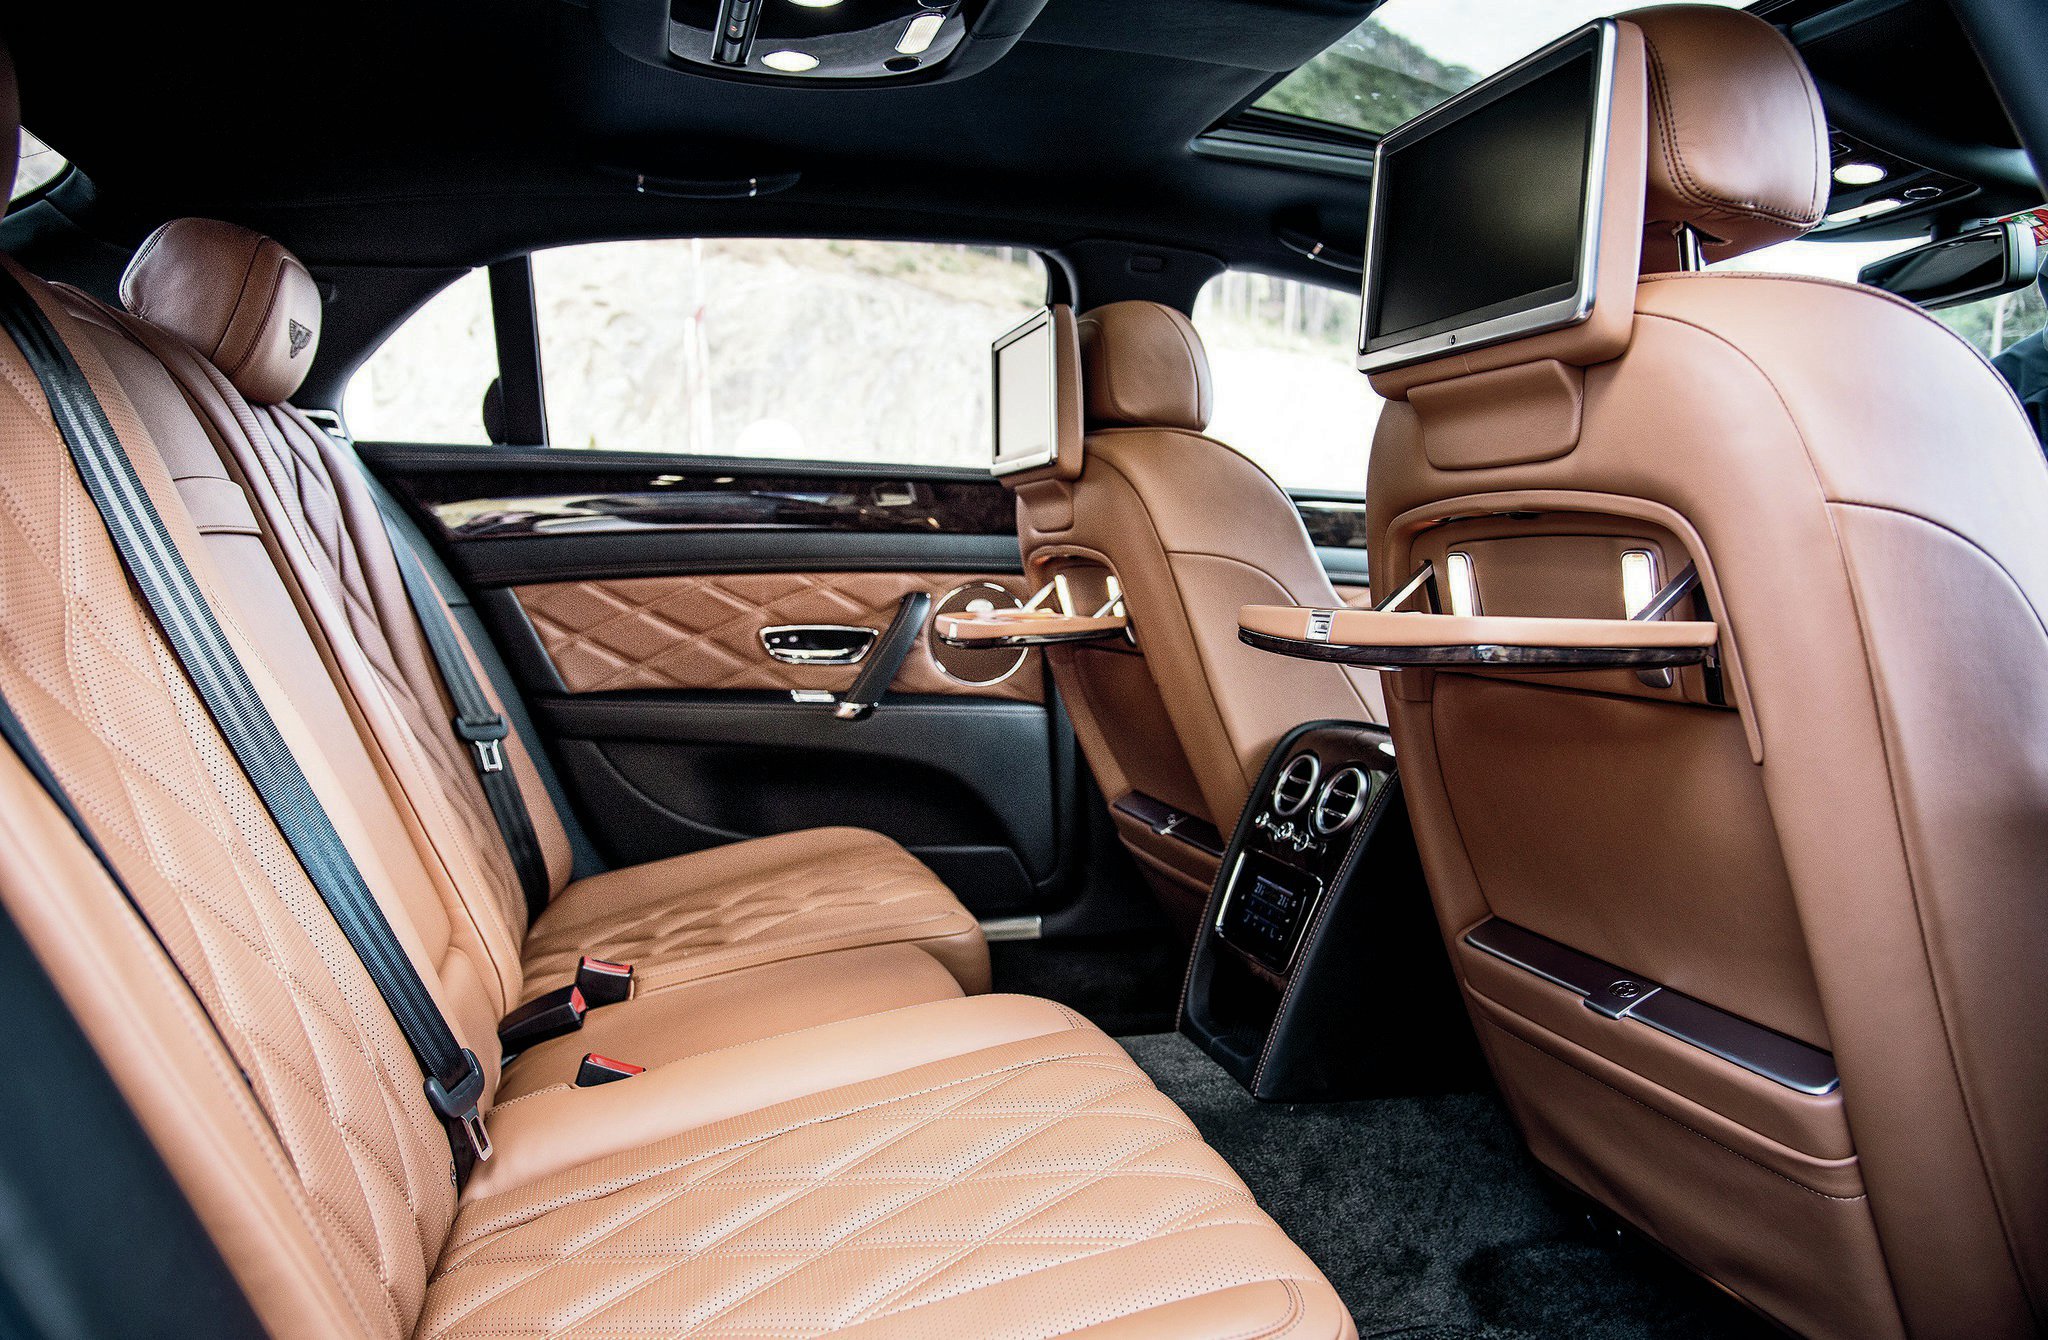 https://detailmobil.com/wp-content/uploads/2017/09/2016-Bentley-Flying-Spur-rear-seat.jpg